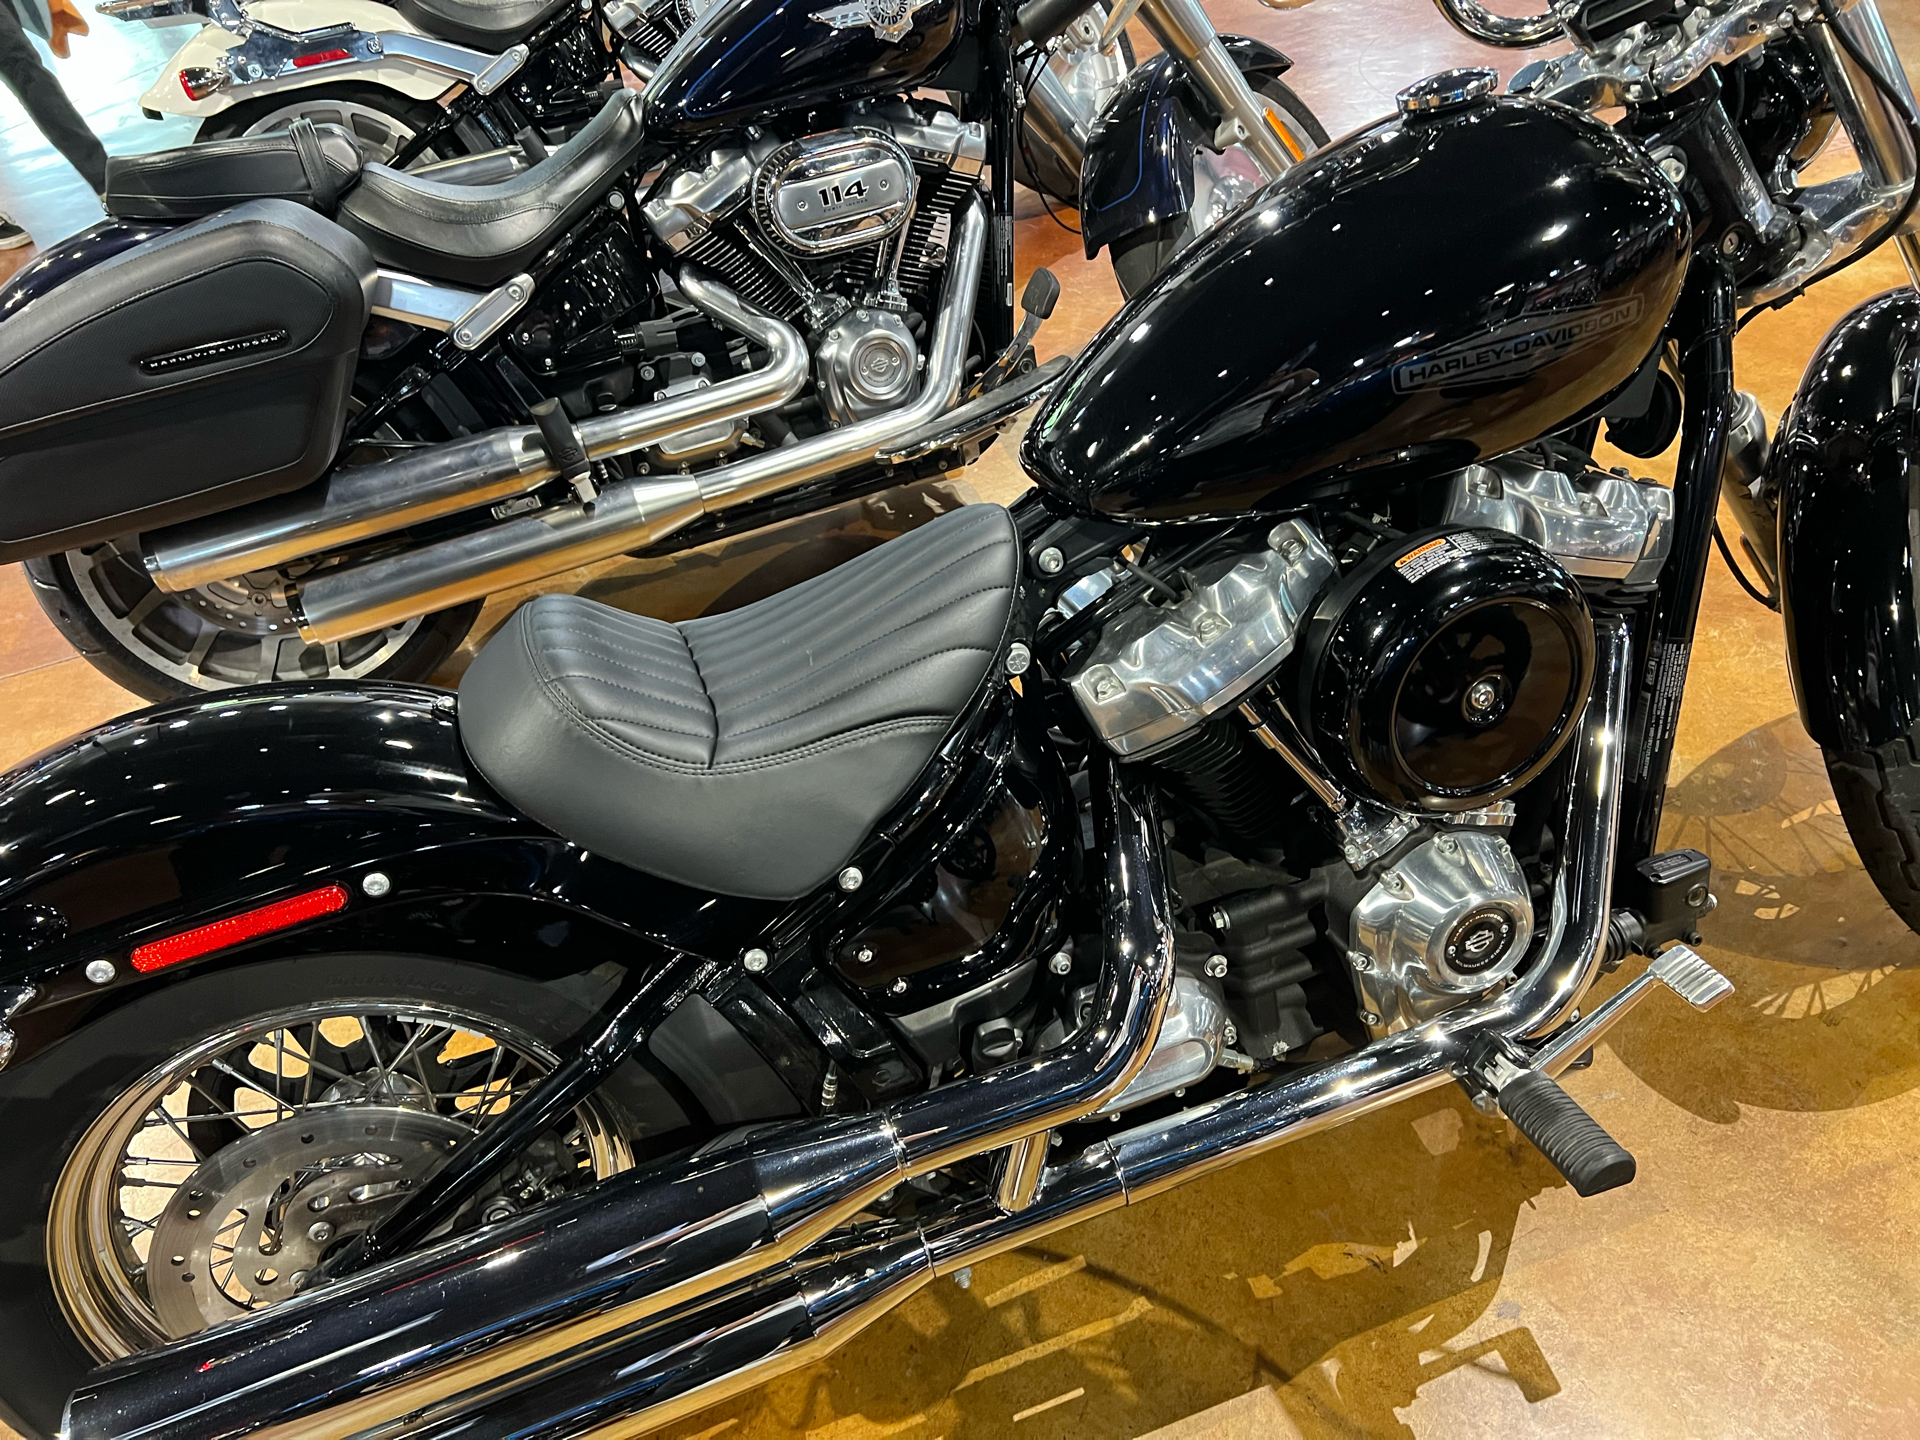 2020 Harley-Davidson Softail Standard near me - Photo 6